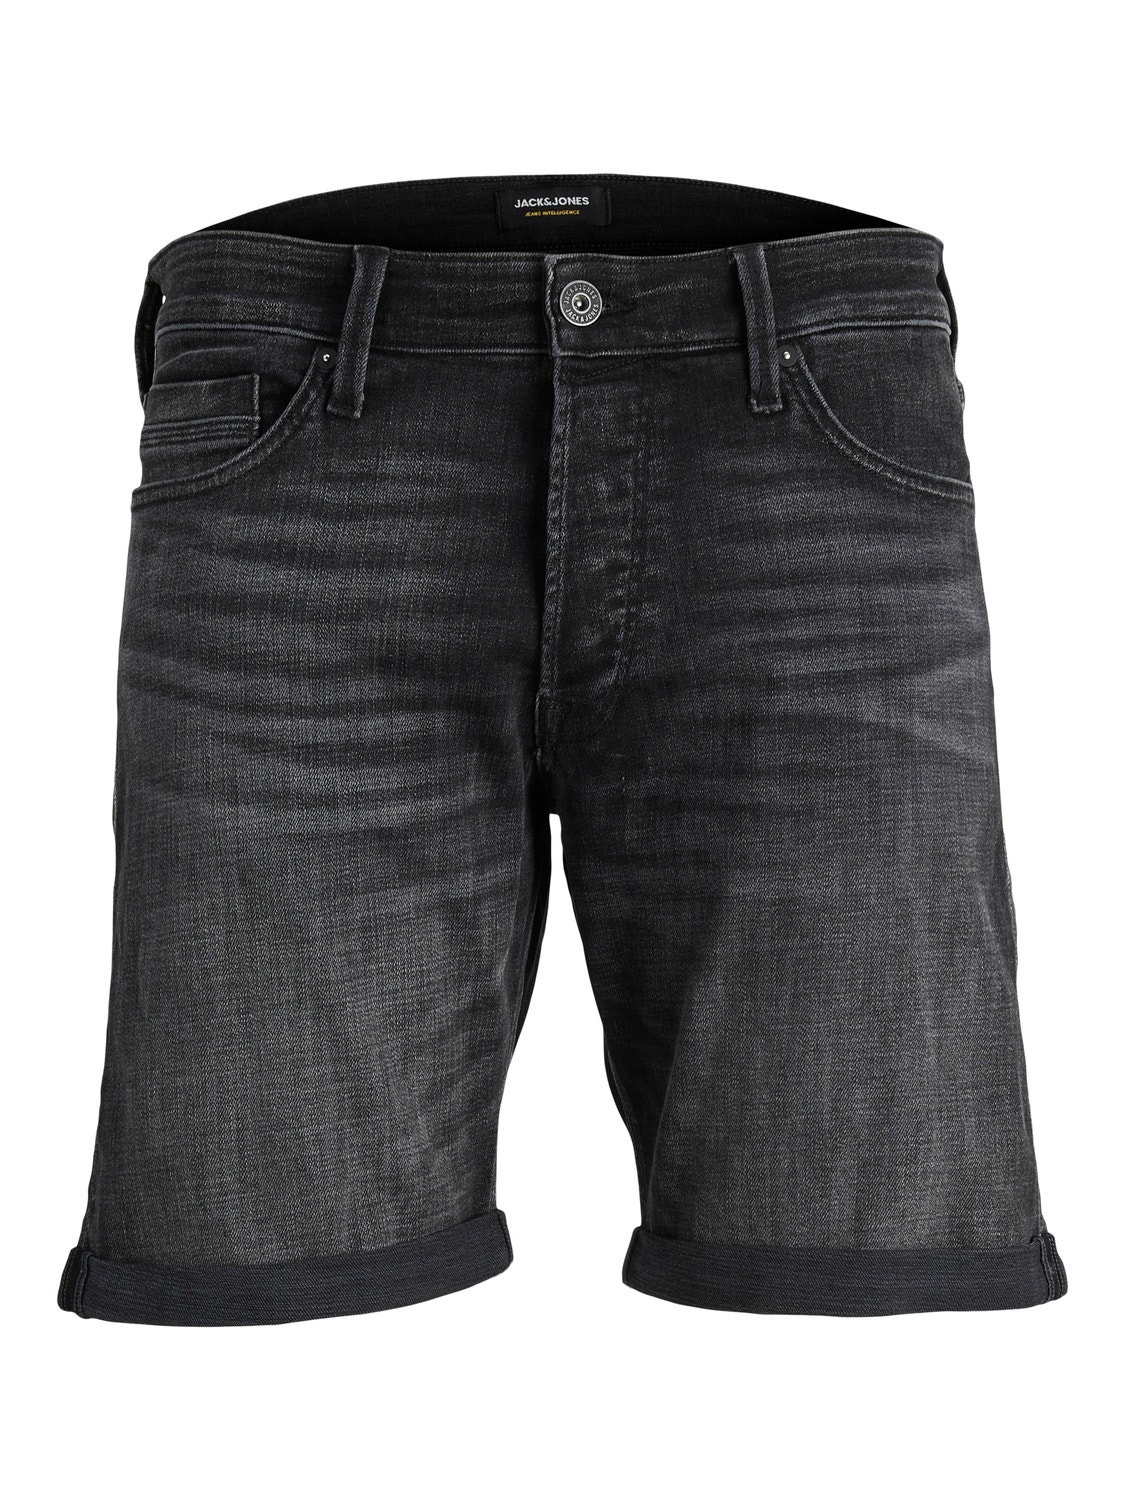 Jack & Jones Relaxed Fit Jeans Shorts -Black Denim - 12249098